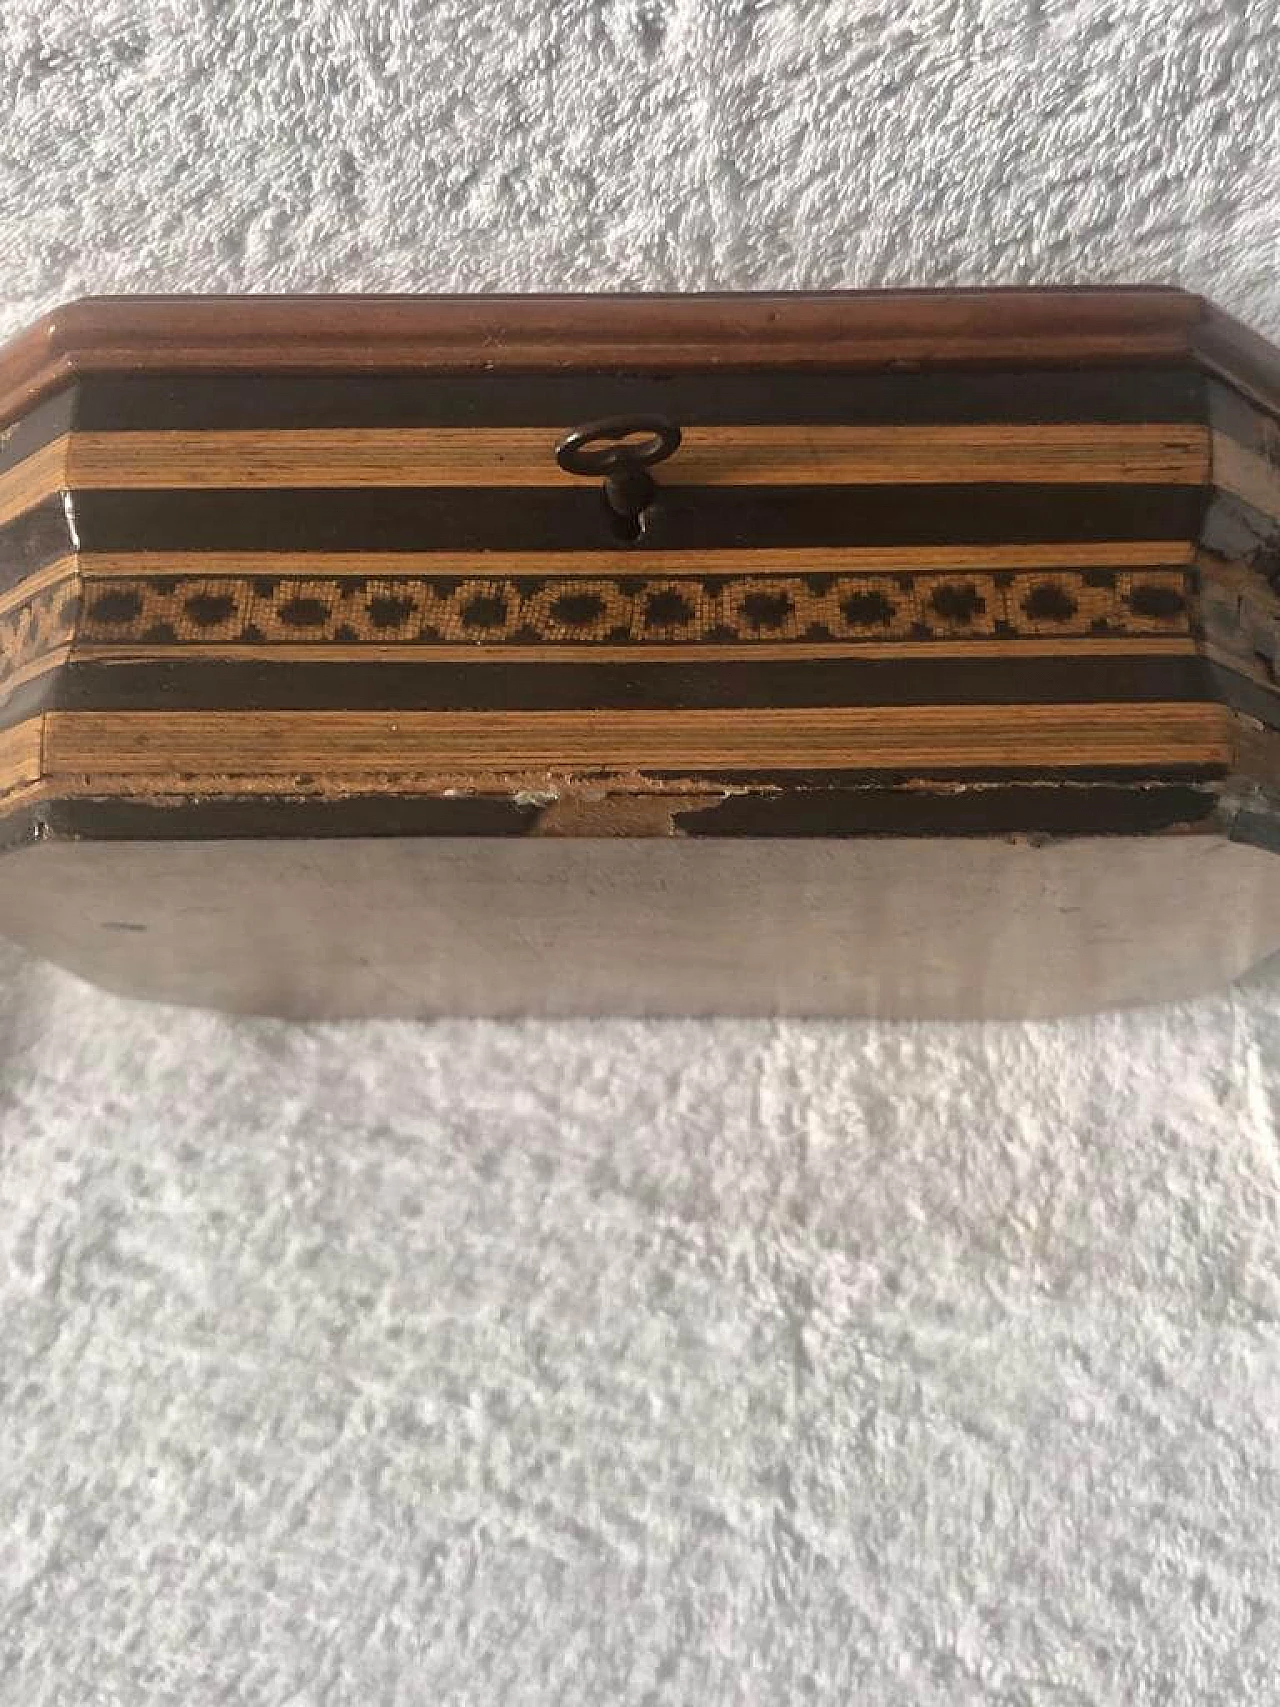 Sorrentine jewelry box in inlaid wood, 19th century 1400596